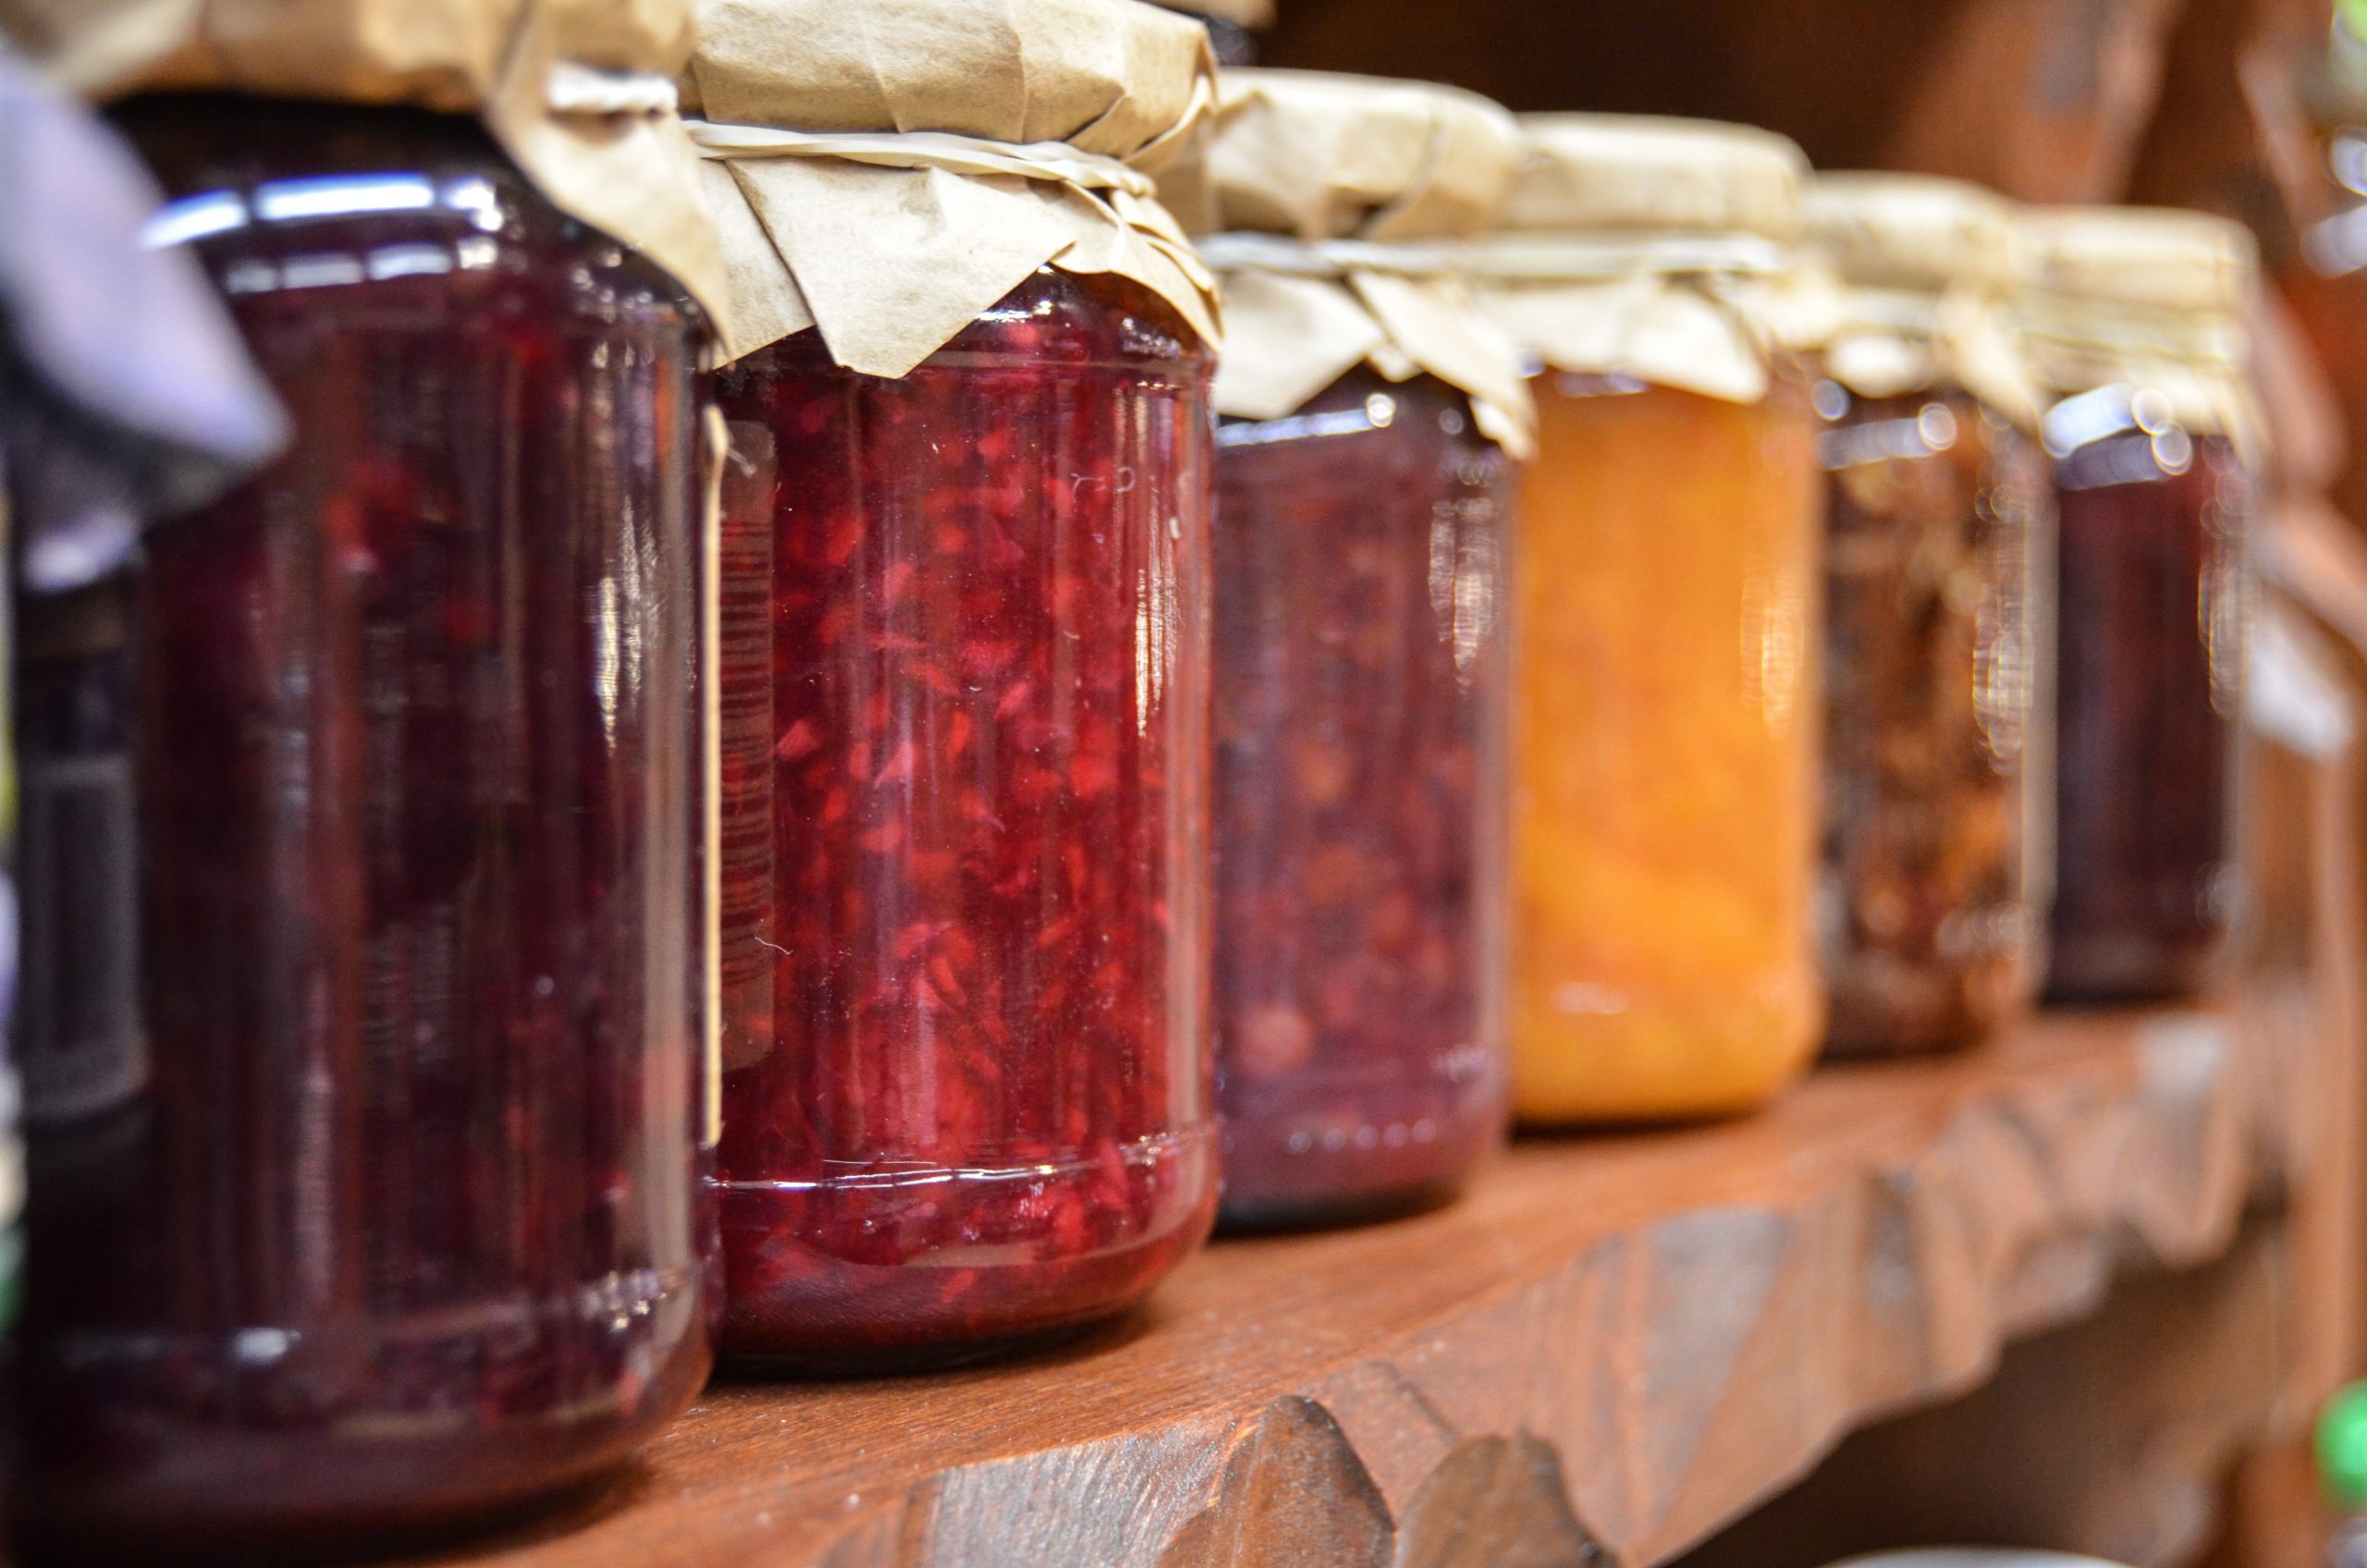 Types of jam